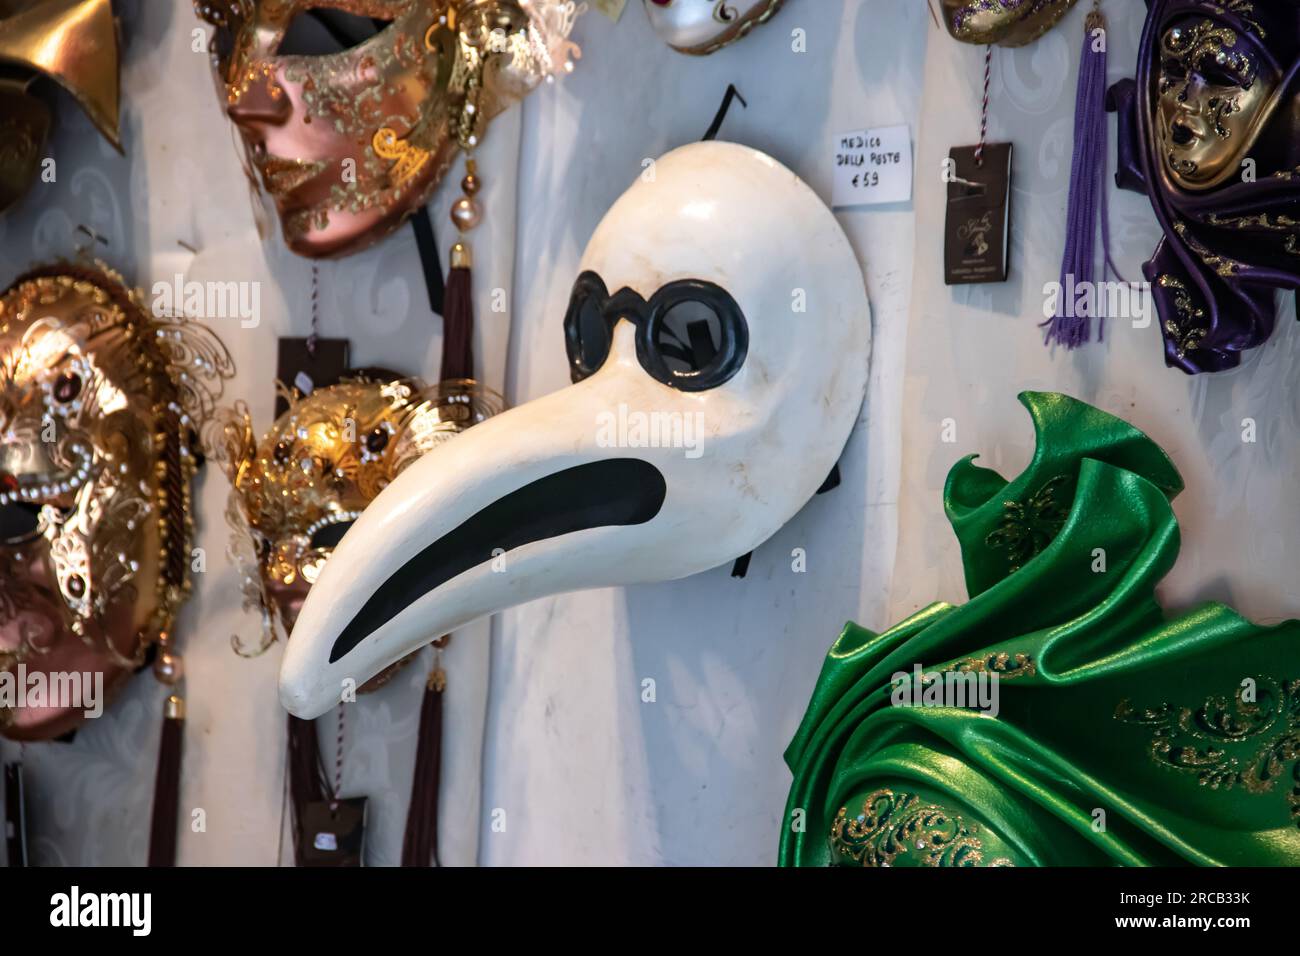 Imaginative Venetian carnival masks collection in a souvenir shop in Venice Stock Photo